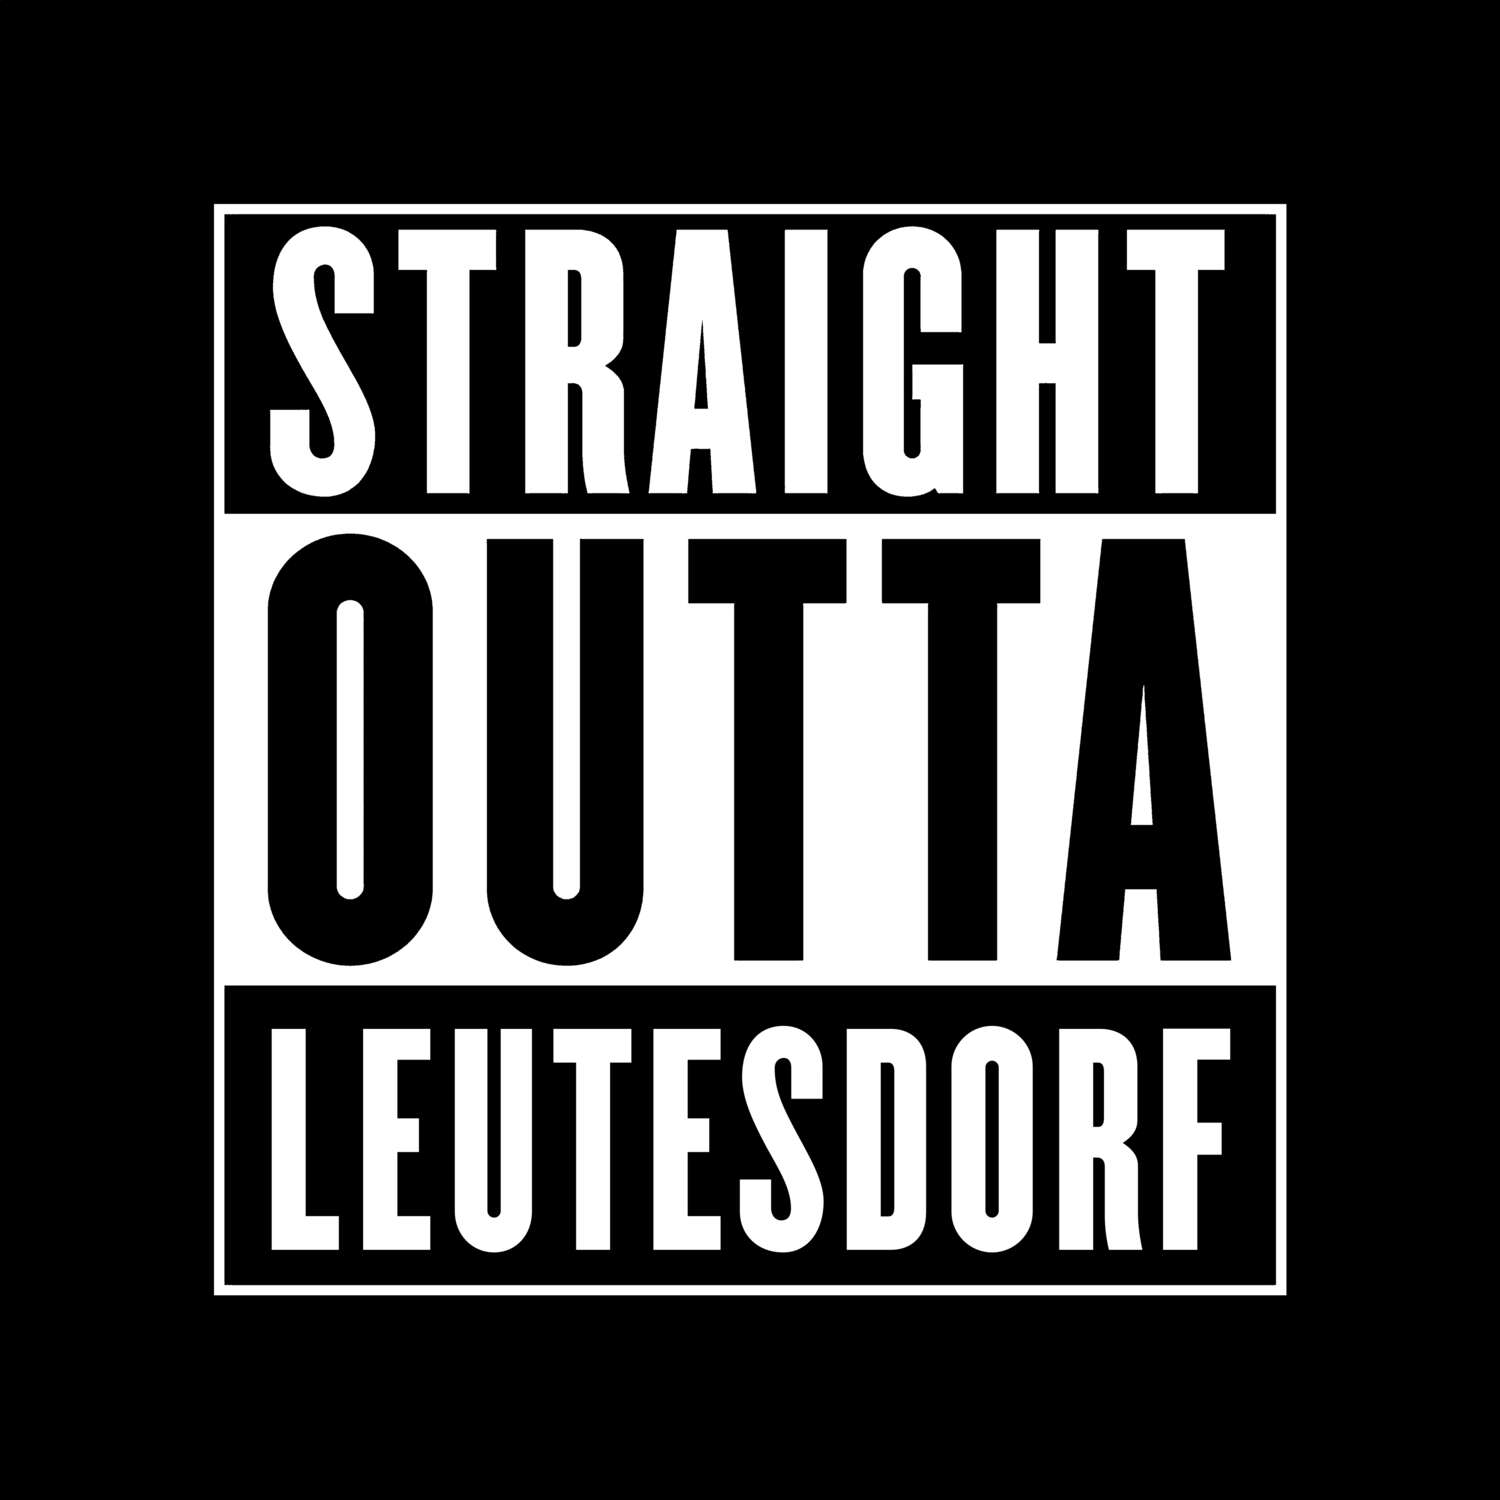 Leutesdorf T-Shirt »Straight Outta«